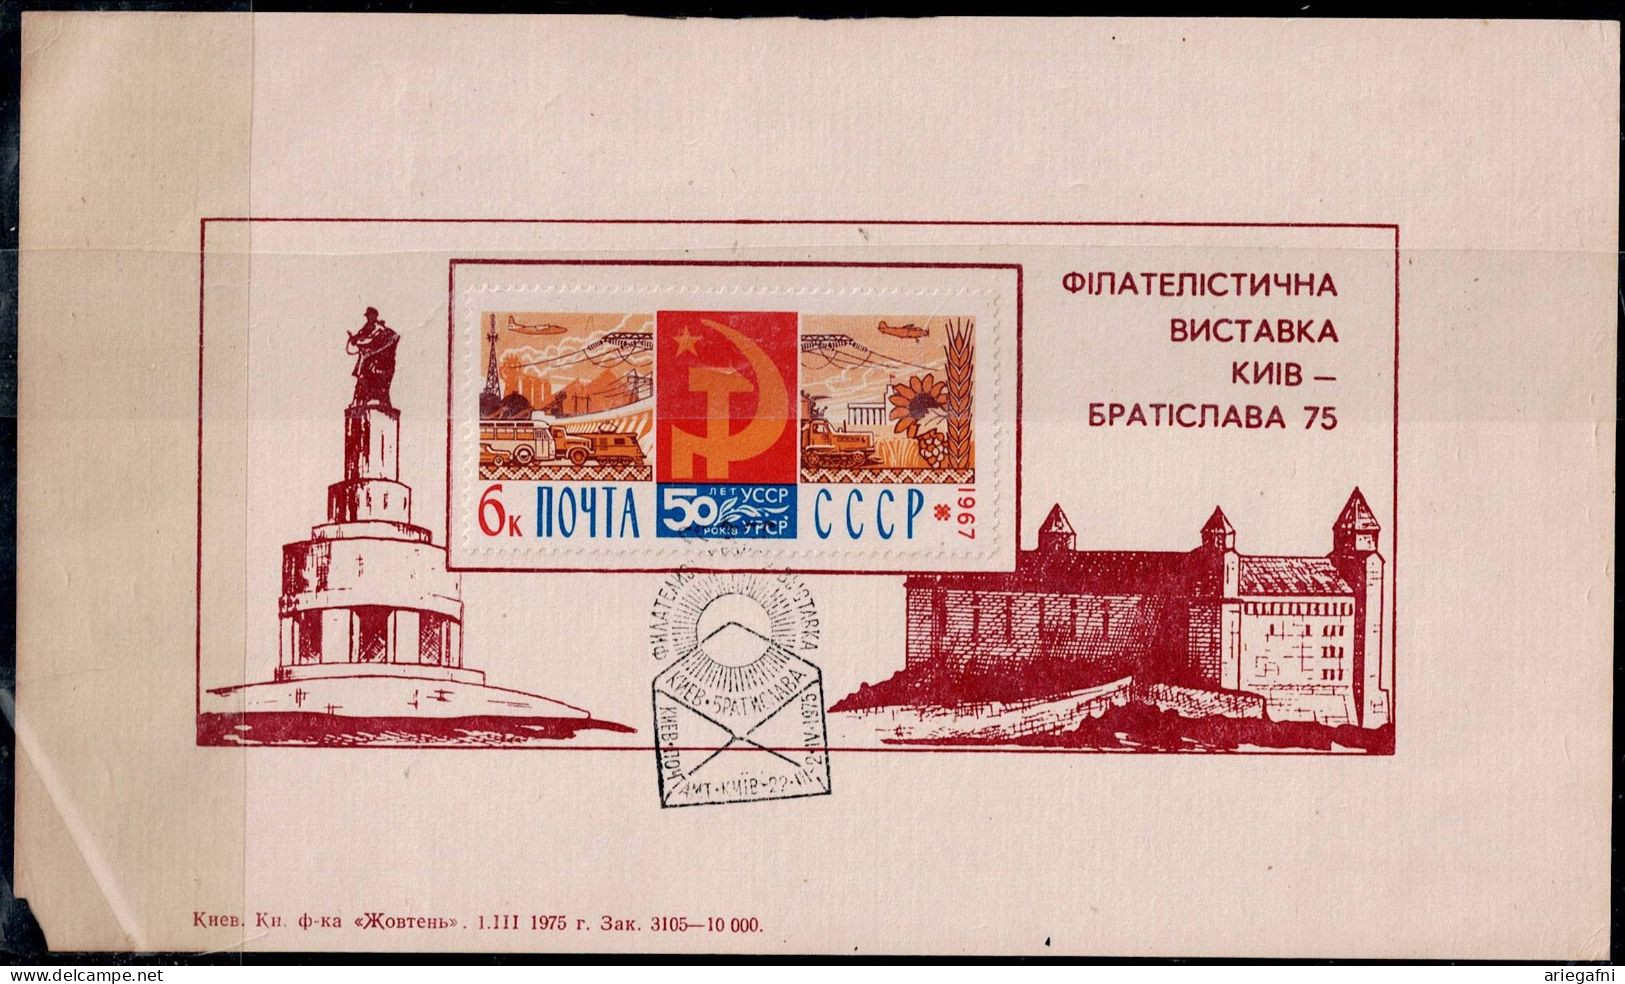 RUSSIA 1975 TICKET TO THE PHILATELIST EXHIBITION KIEV-BRATISLAVA 75 VF!! - Lettres & Documents